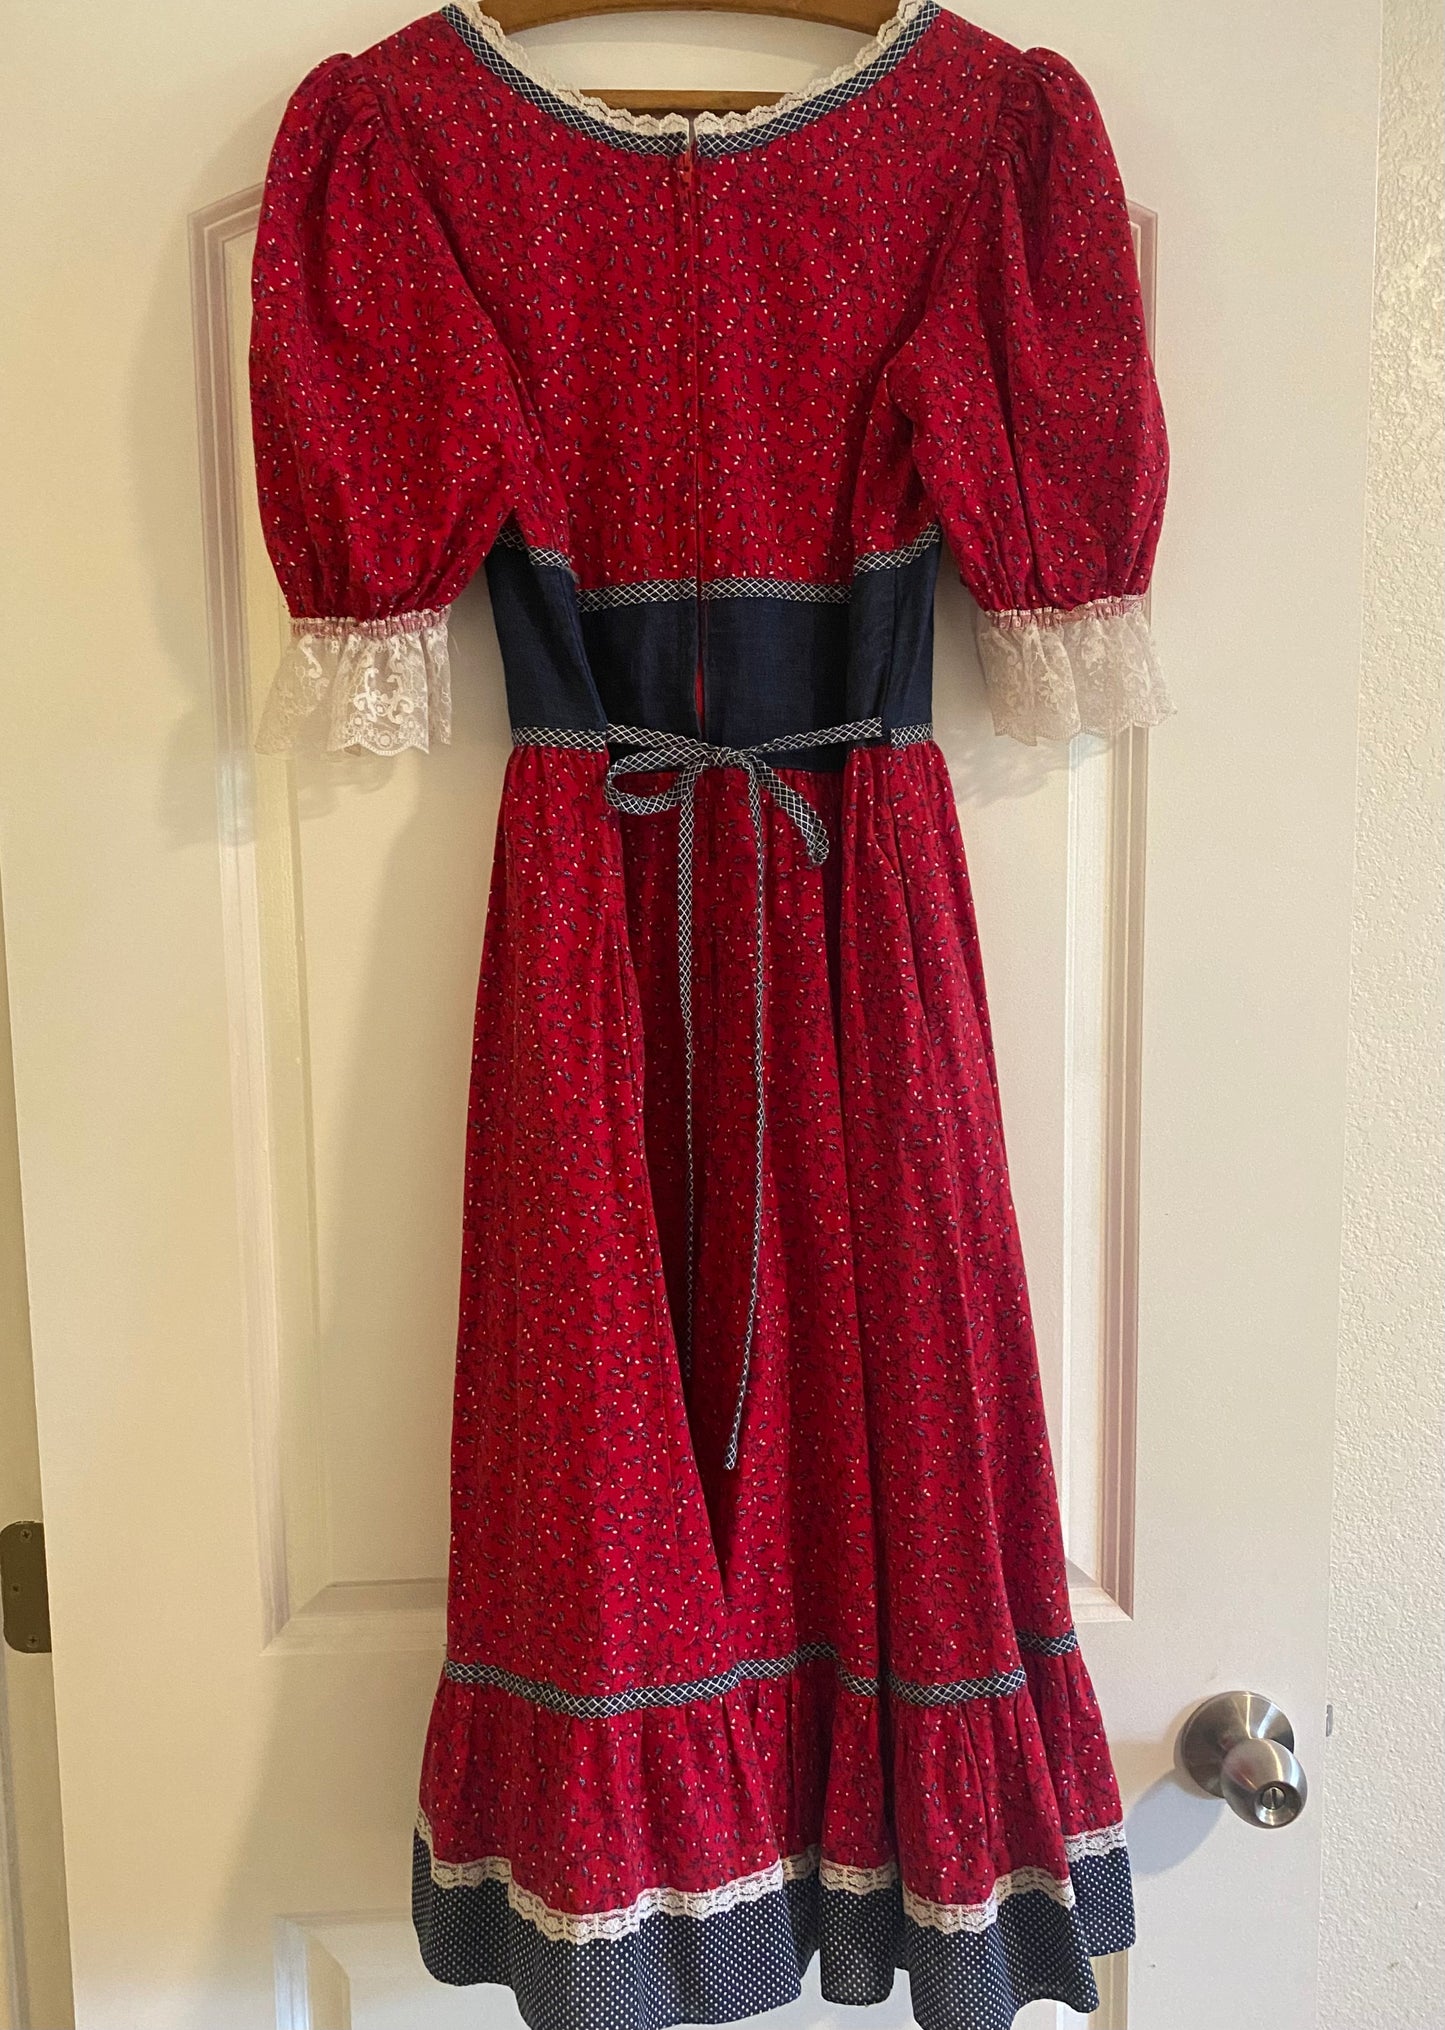 1970s Gunne Sax Red Calico Corset Dress size 11